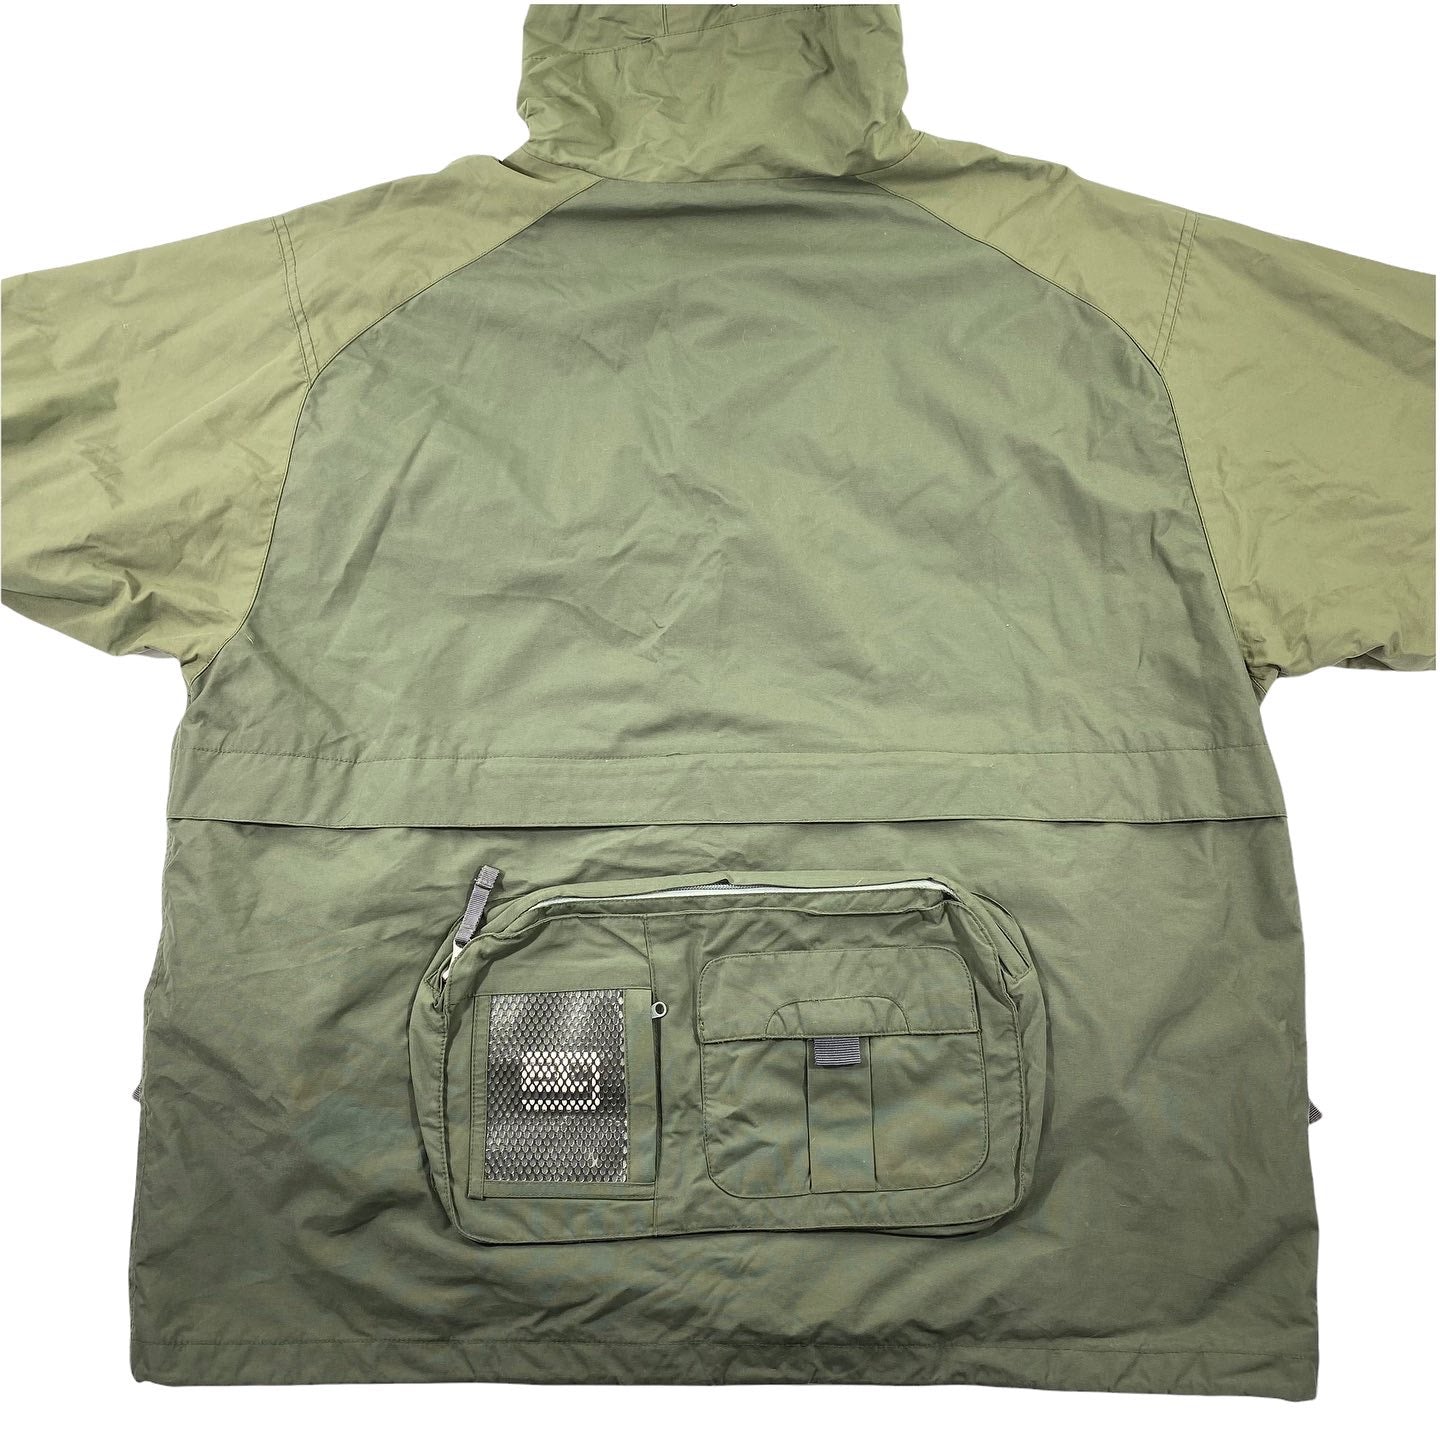 Burton analog jacket XL